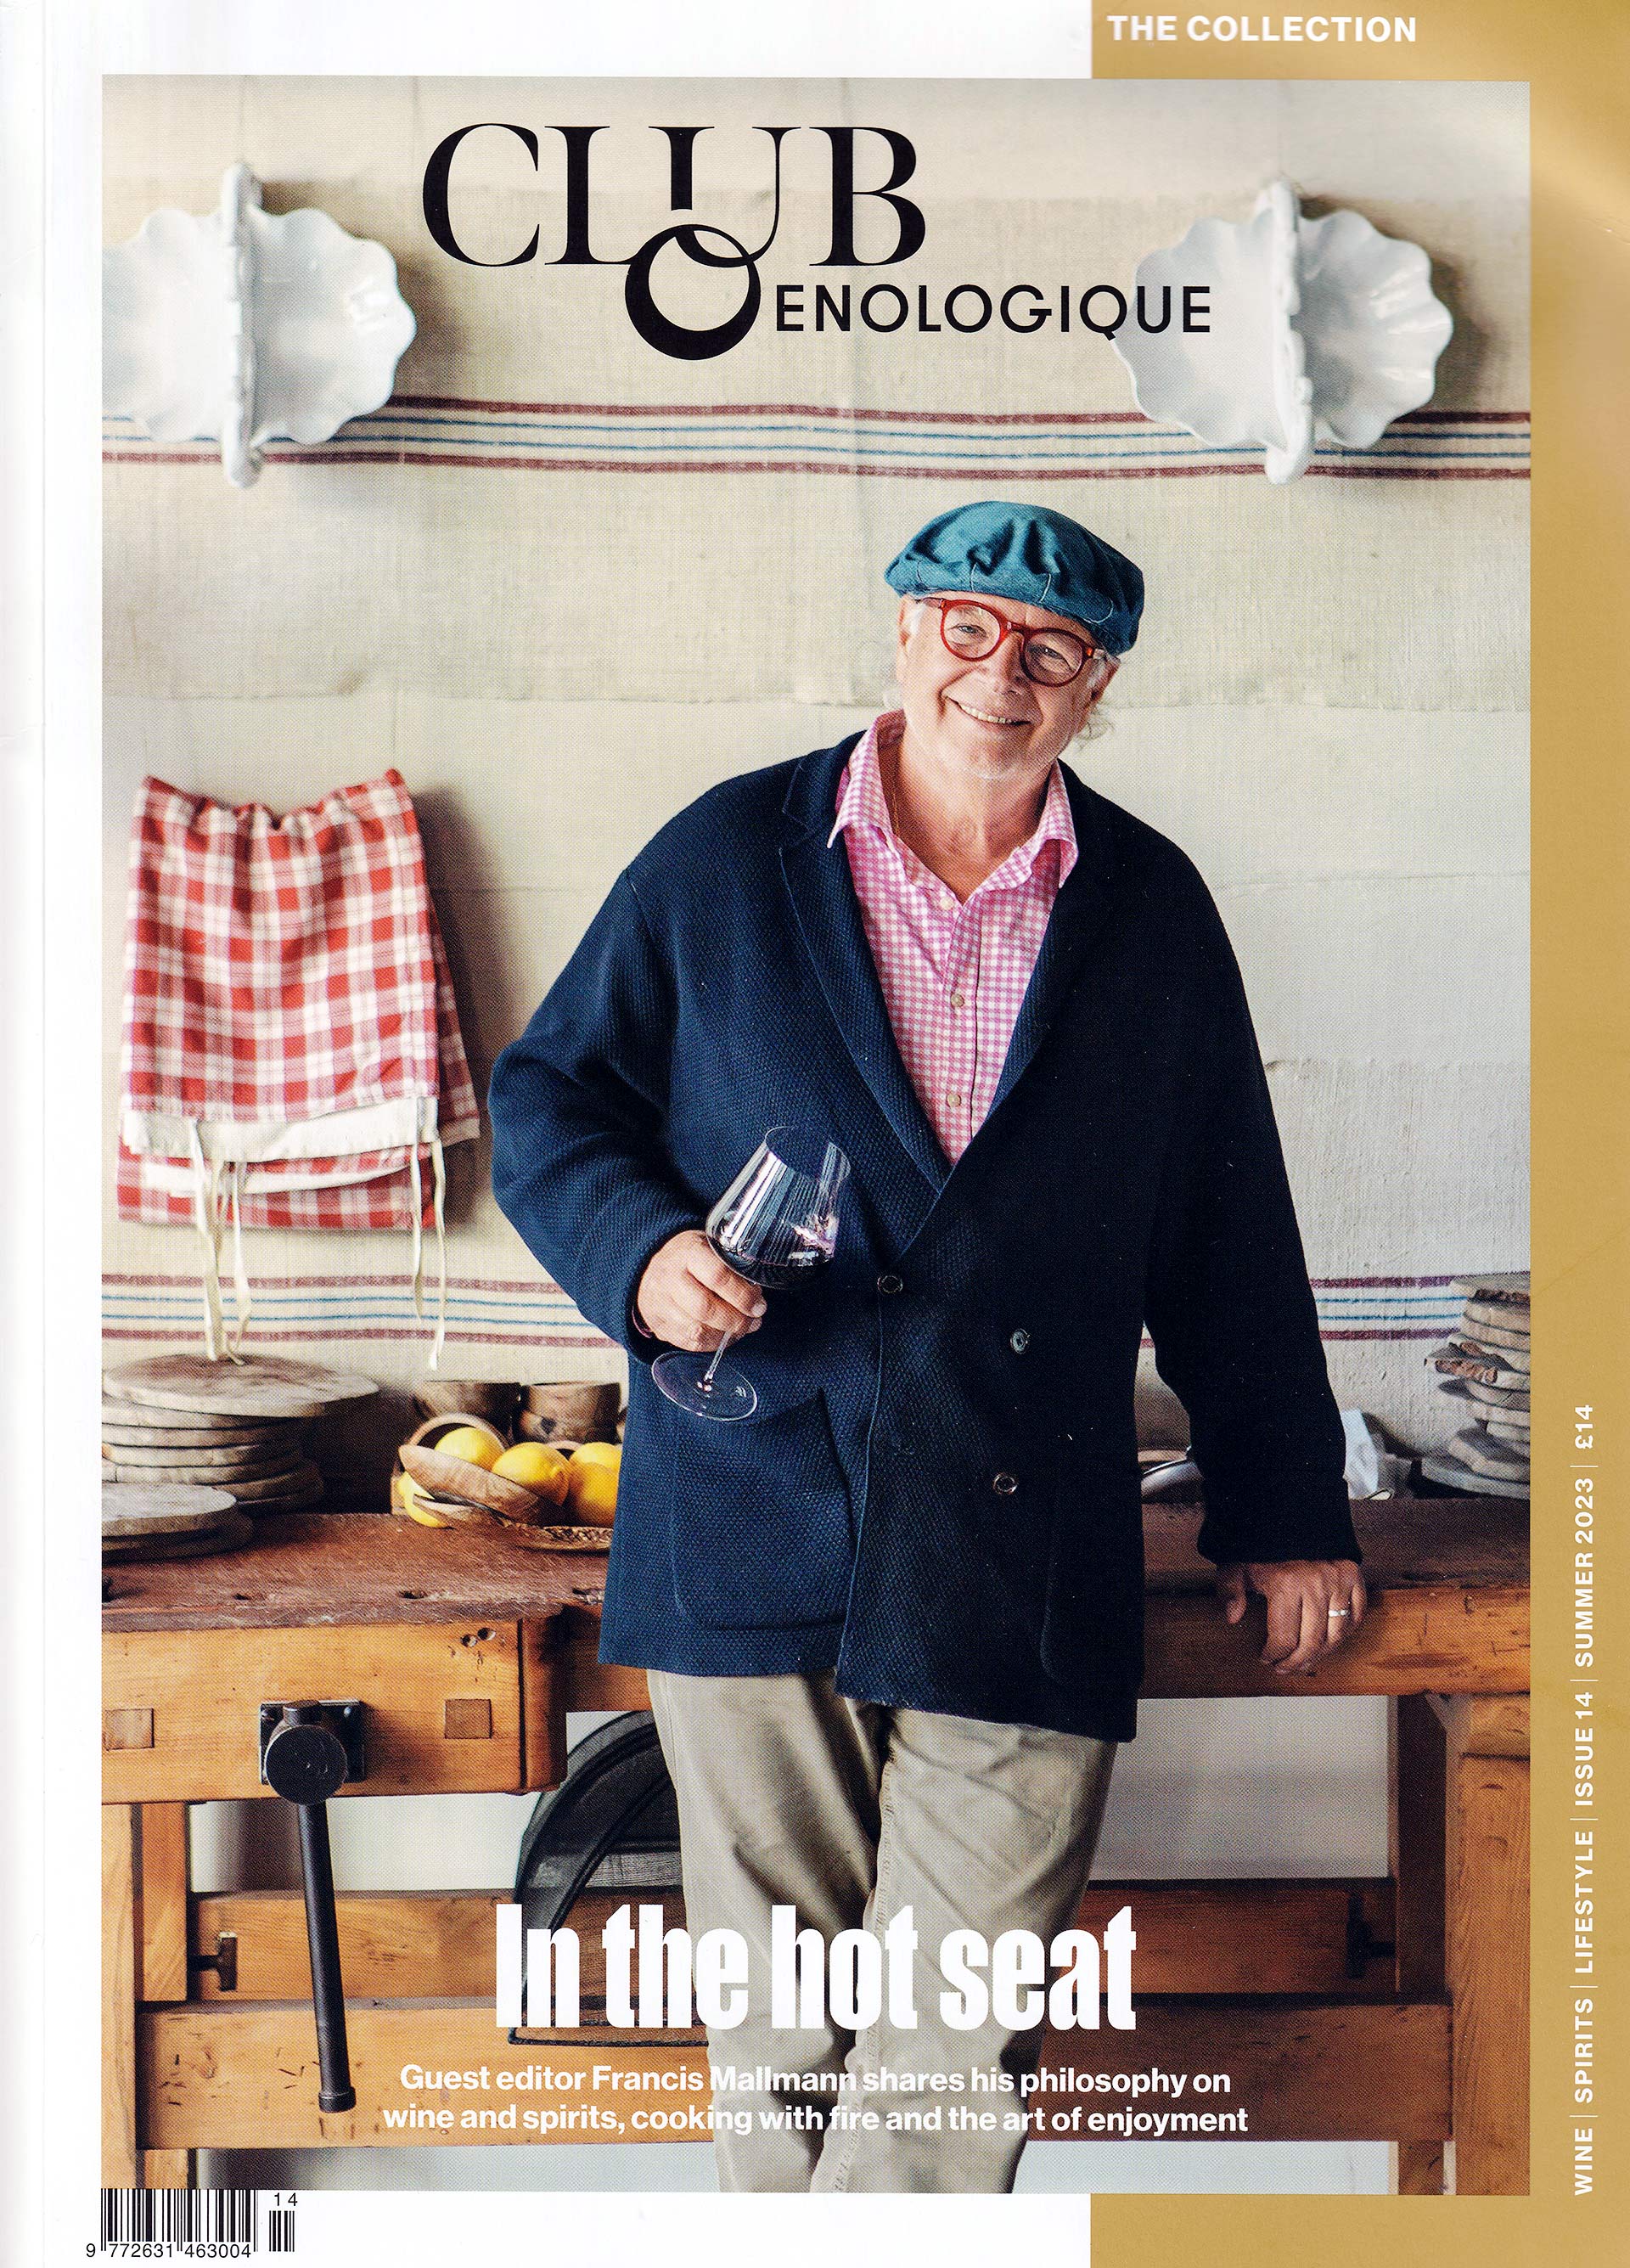 Magazine cover, showing portrait of chef Francis Mallmann